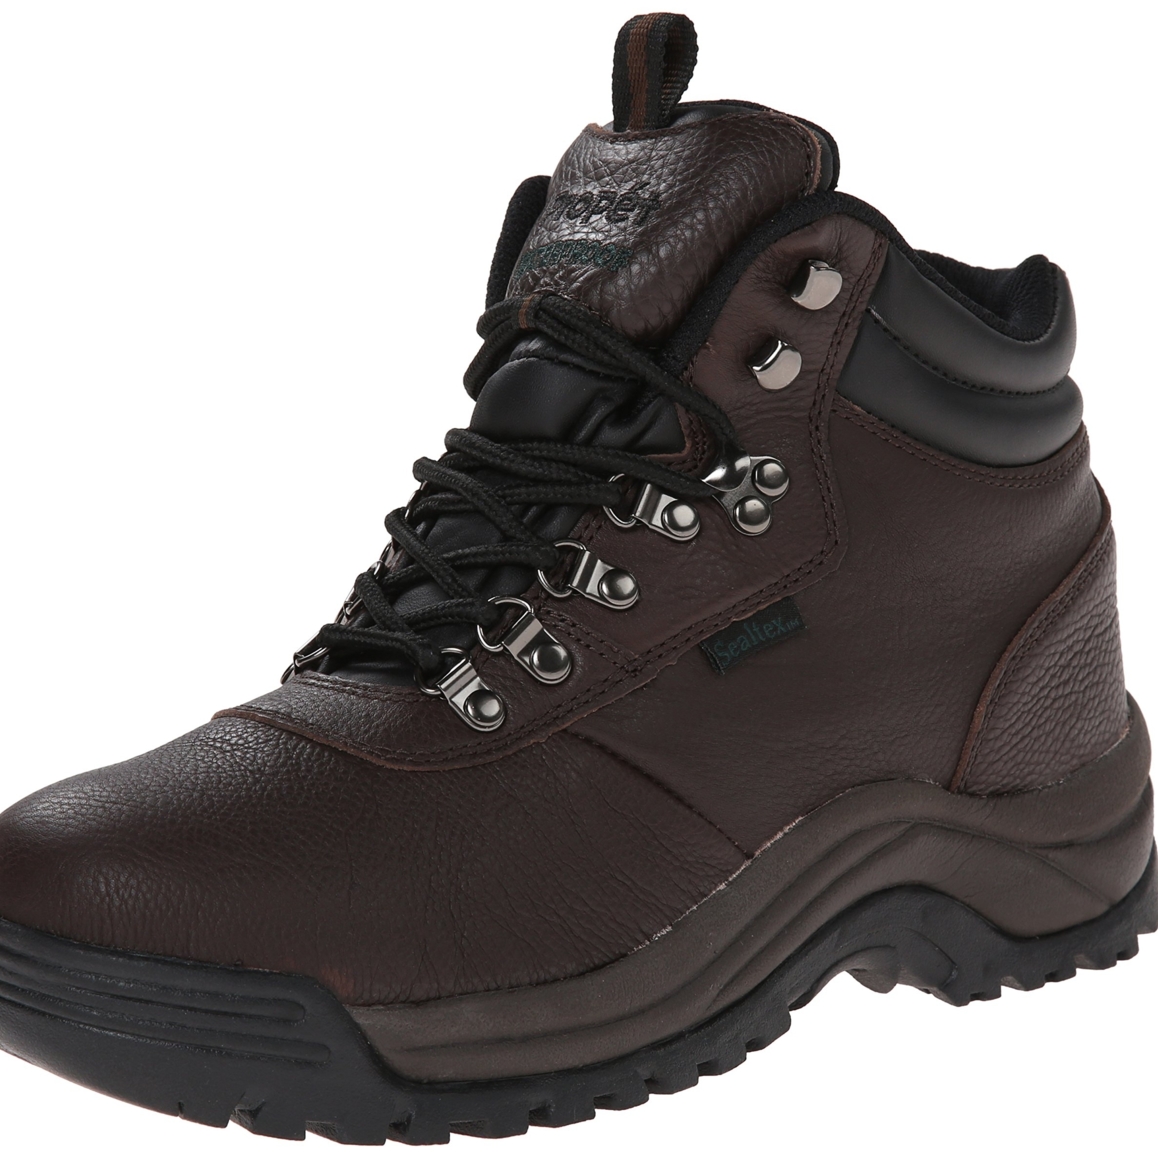 Propet Men's Cliff Walker Hiking Boot Bronco Brown - M3188BRO - BRONCO BROWN, 11-2E